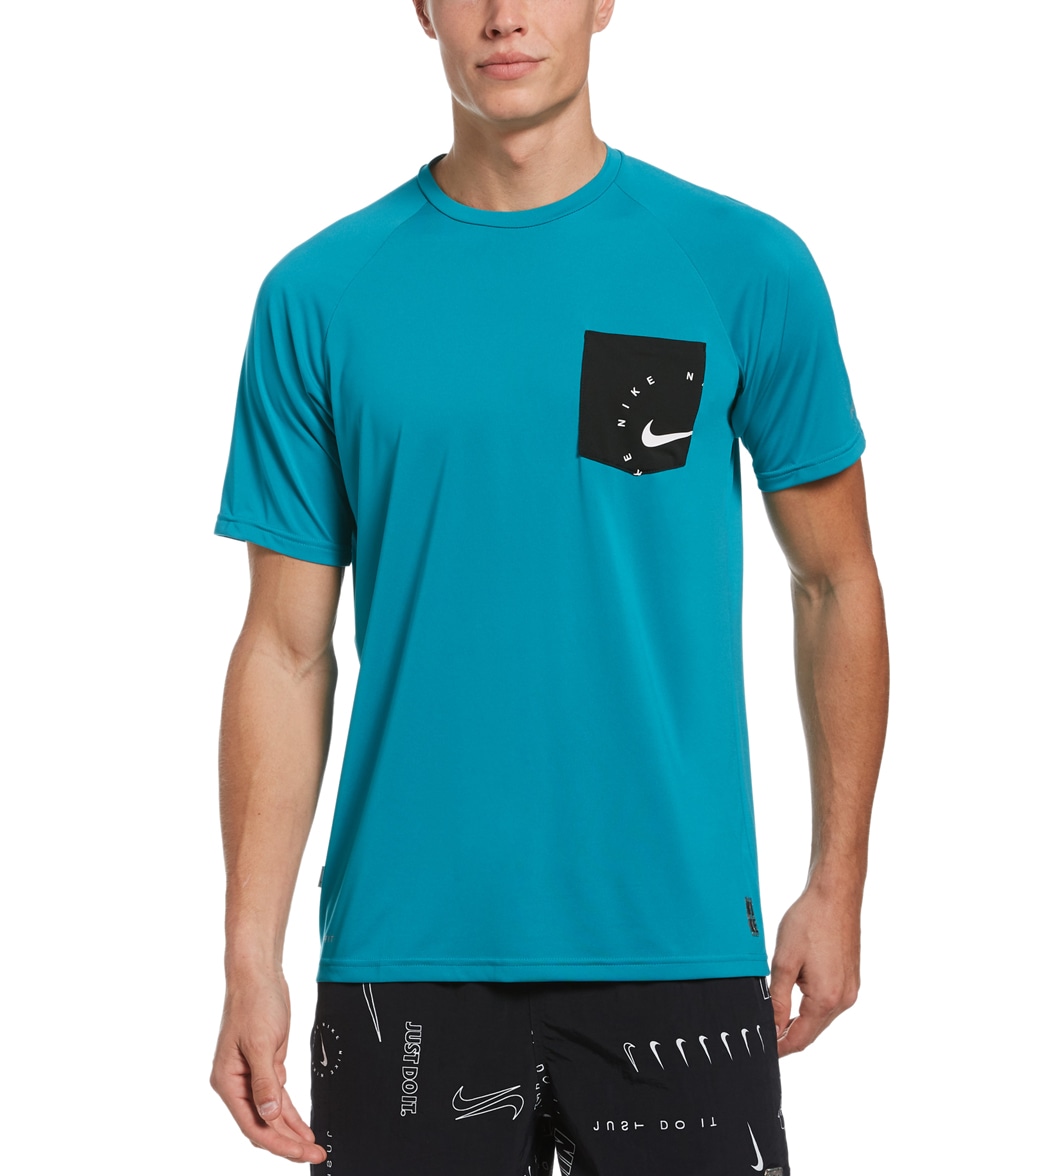 Nike Men's Logo Short Sleeve Hydro Rashguard Shirt - Aquamarine Medium - Swimoutlet.com